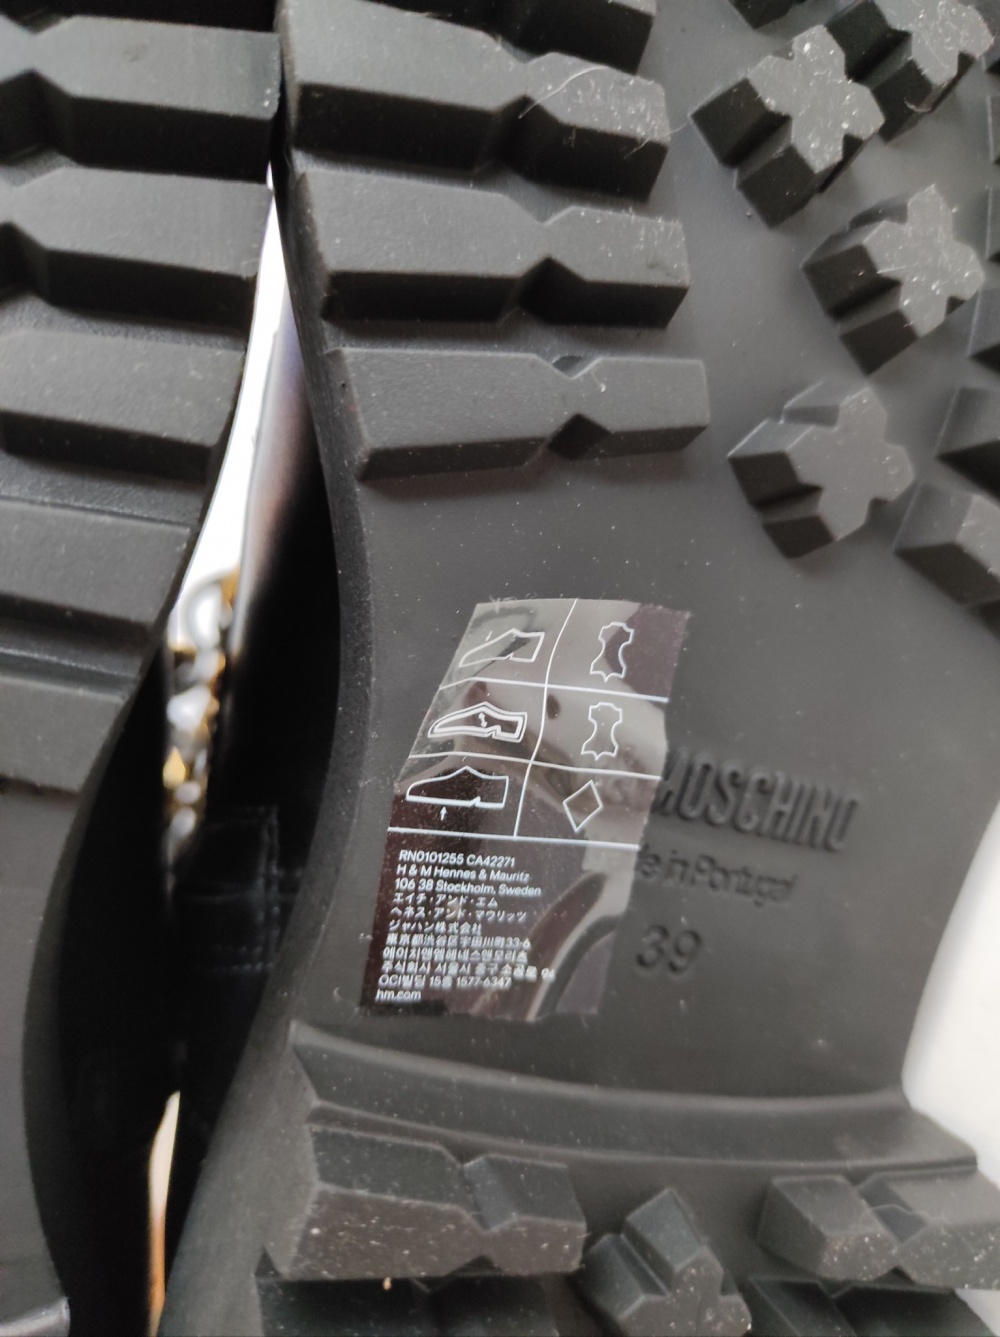 Ботинки Moschino & H&M, 39 размер